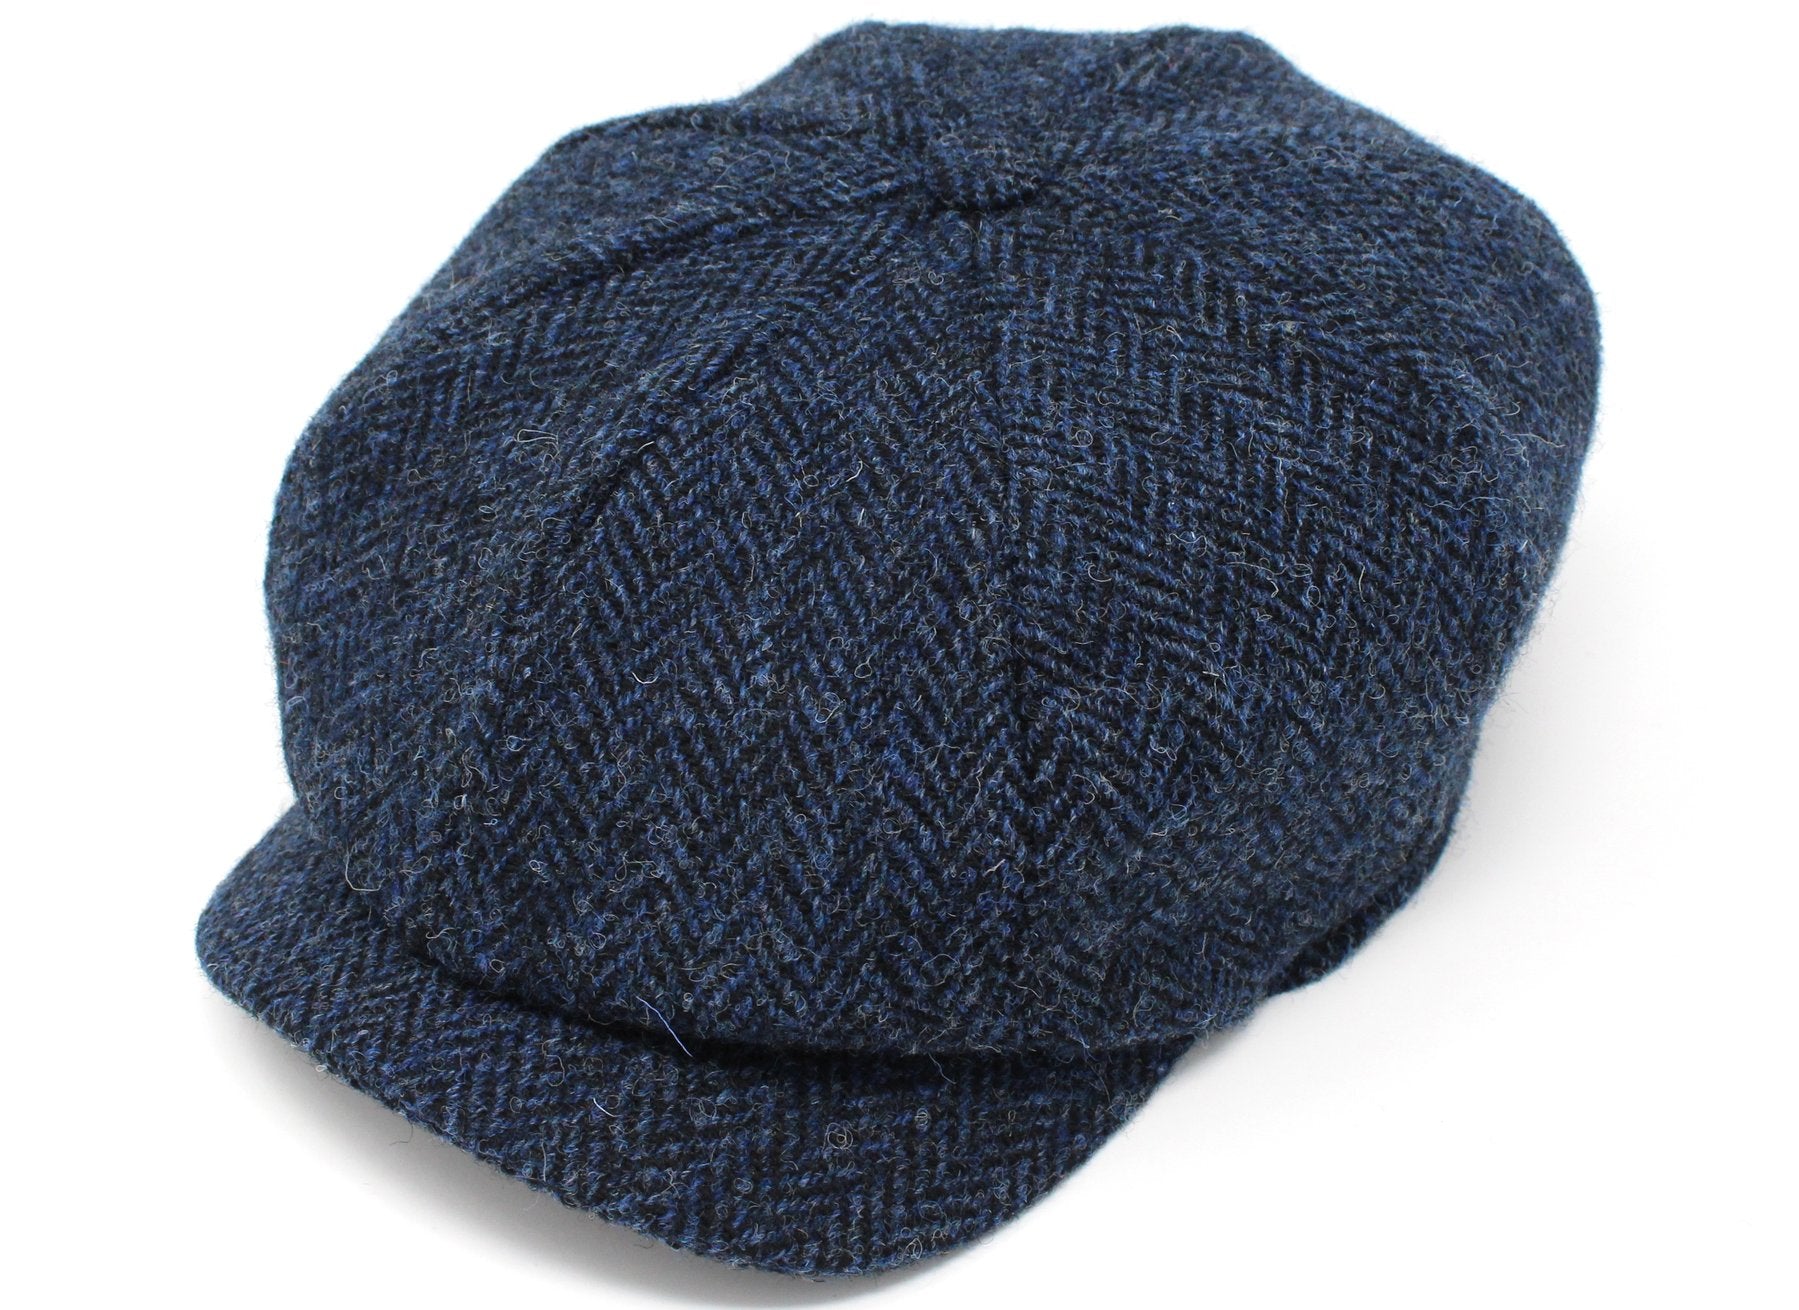 Blue and Black Herringbone Donegal Tweed Peaky Blinders Style Cap by Hanna Hats of Donegal.